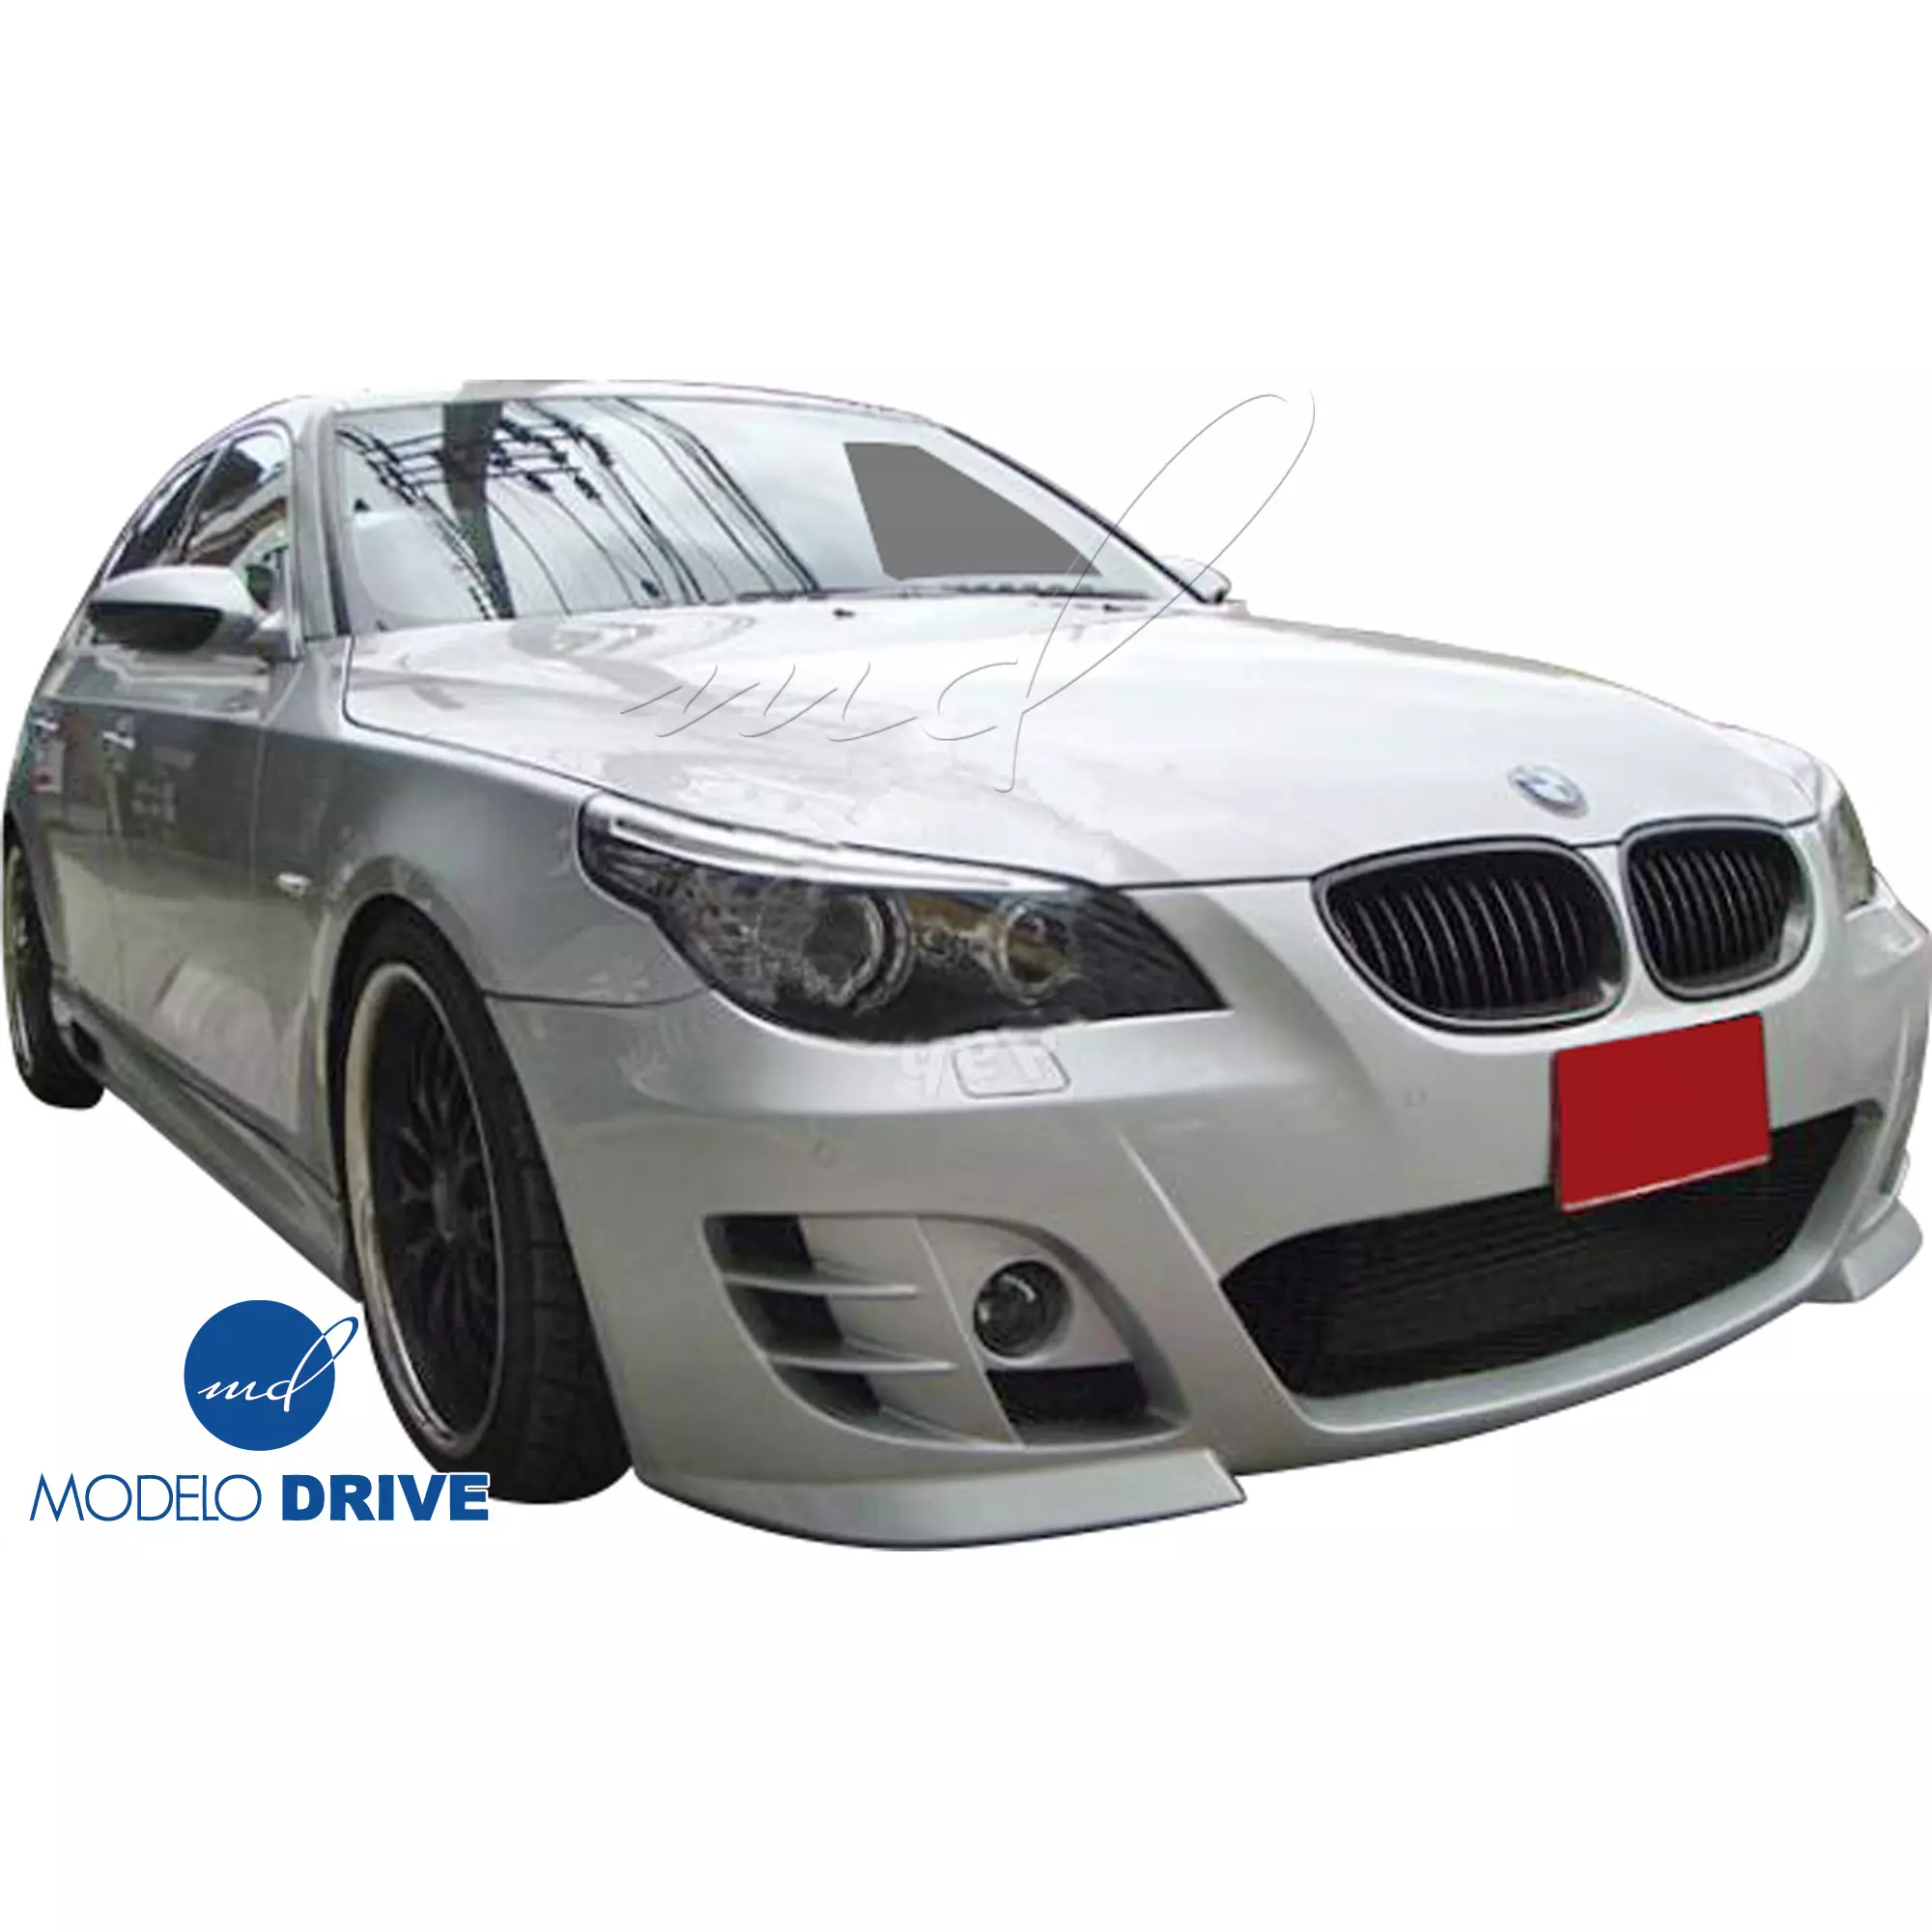 ModeloDrive FRP KERS Body Kit 4pc > BMW 3-Series E60 2004-2010 > 4dr - Image 5